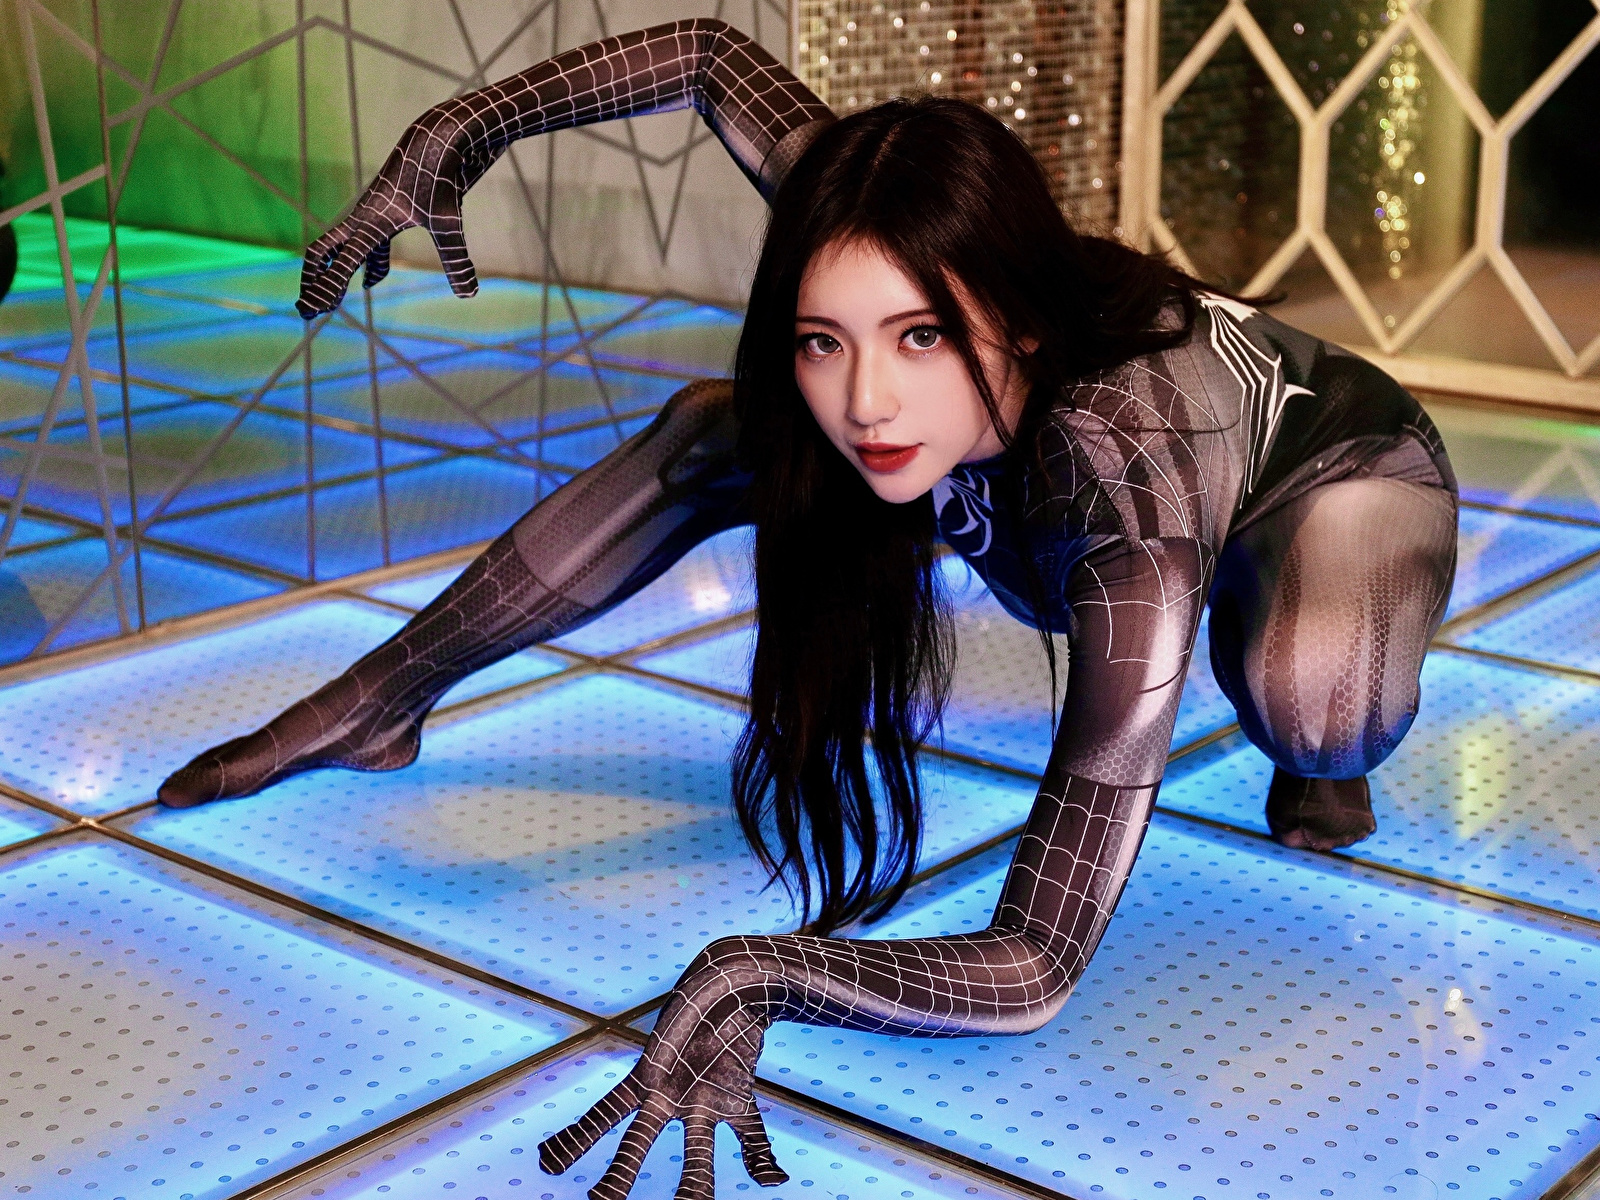 Fotos Spiderman Held Pose Mädchens Asiaten Hand Blick 1600x1200 posiert junge frau junge Frauen Asiatische asiatisches Starren